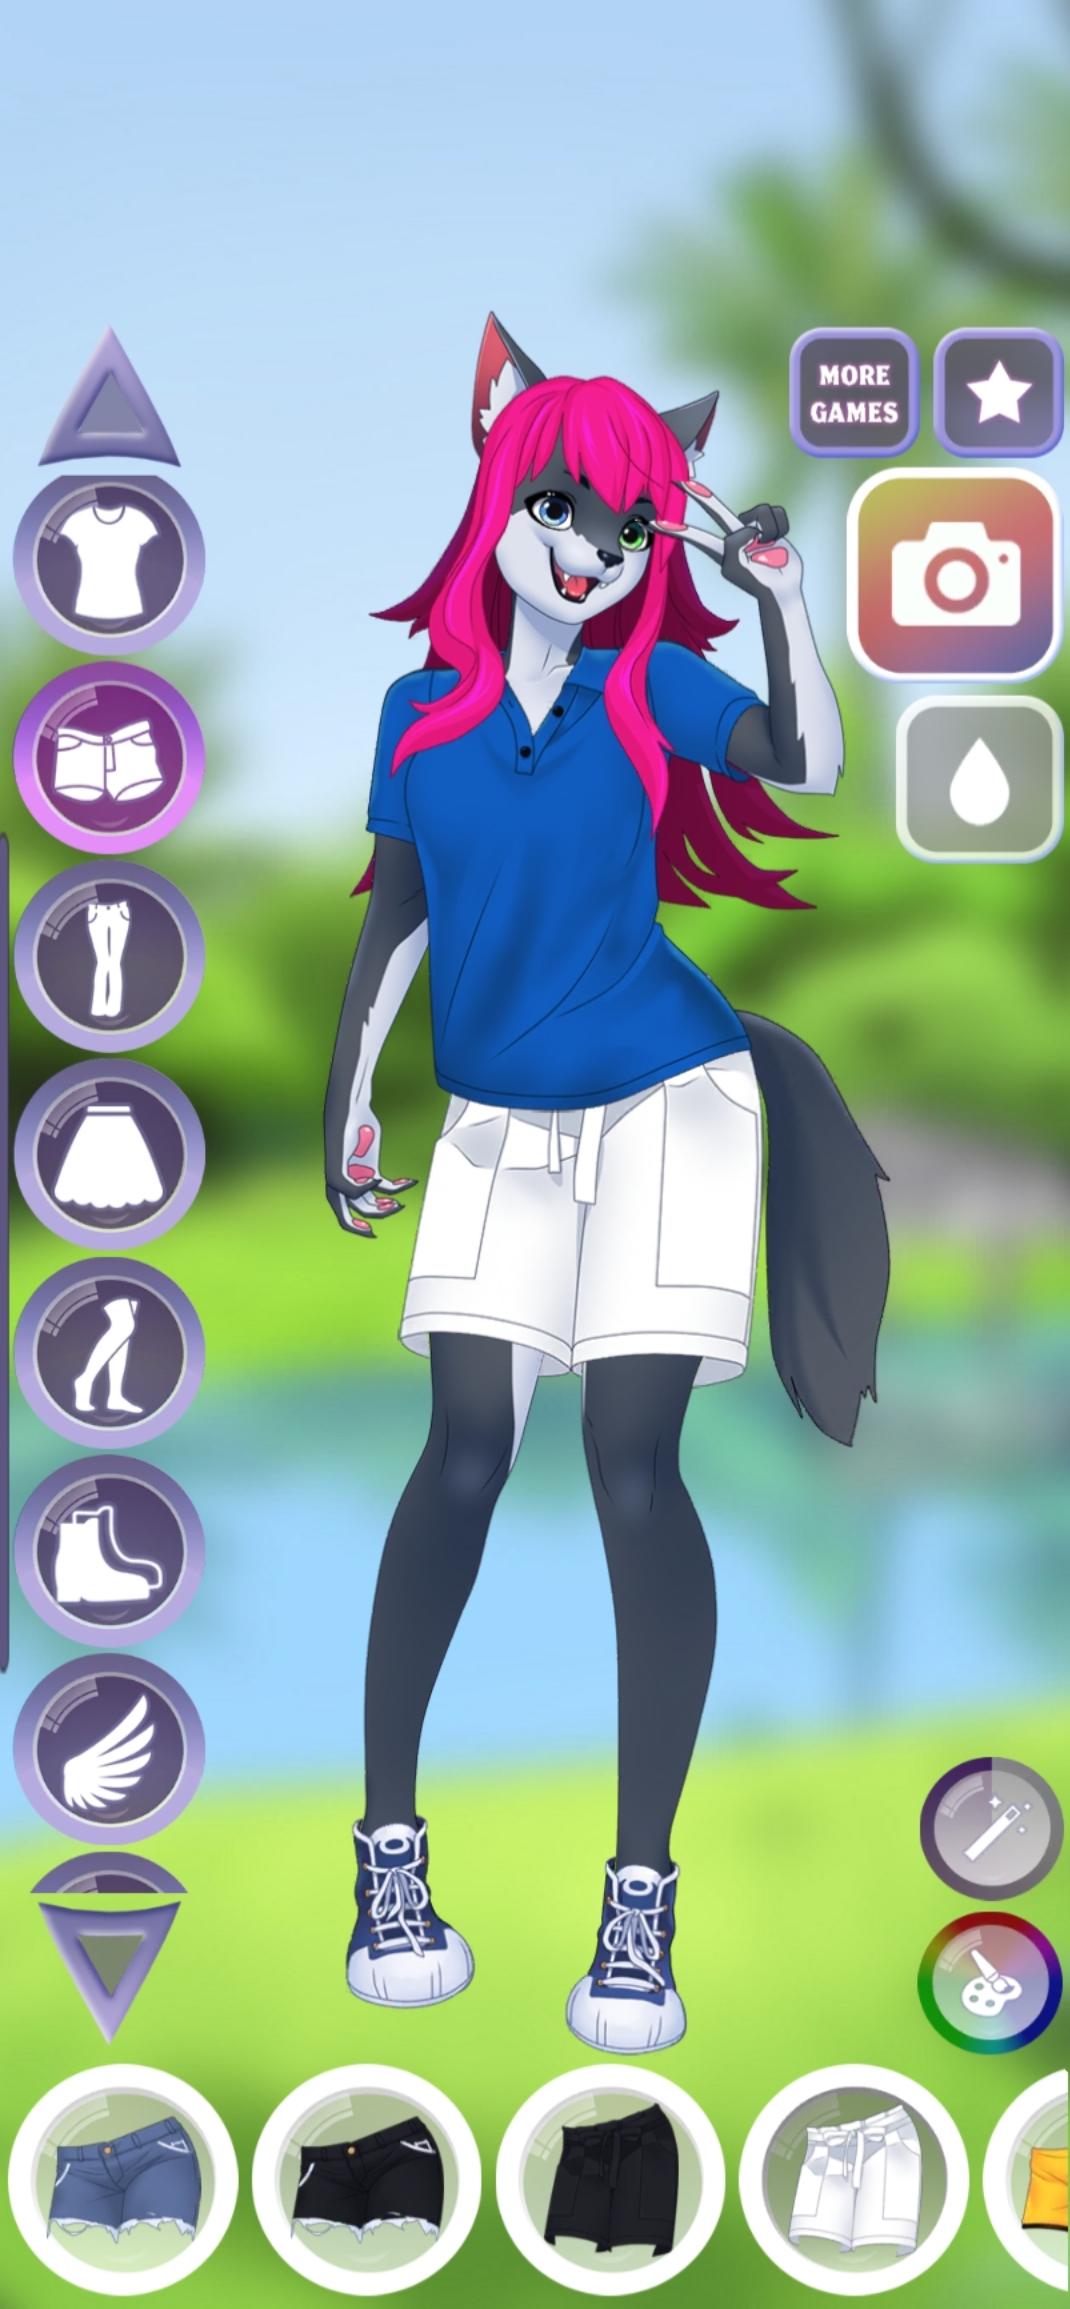 Descarga de APK de Vestir Furry: Juegos de Anime para Android